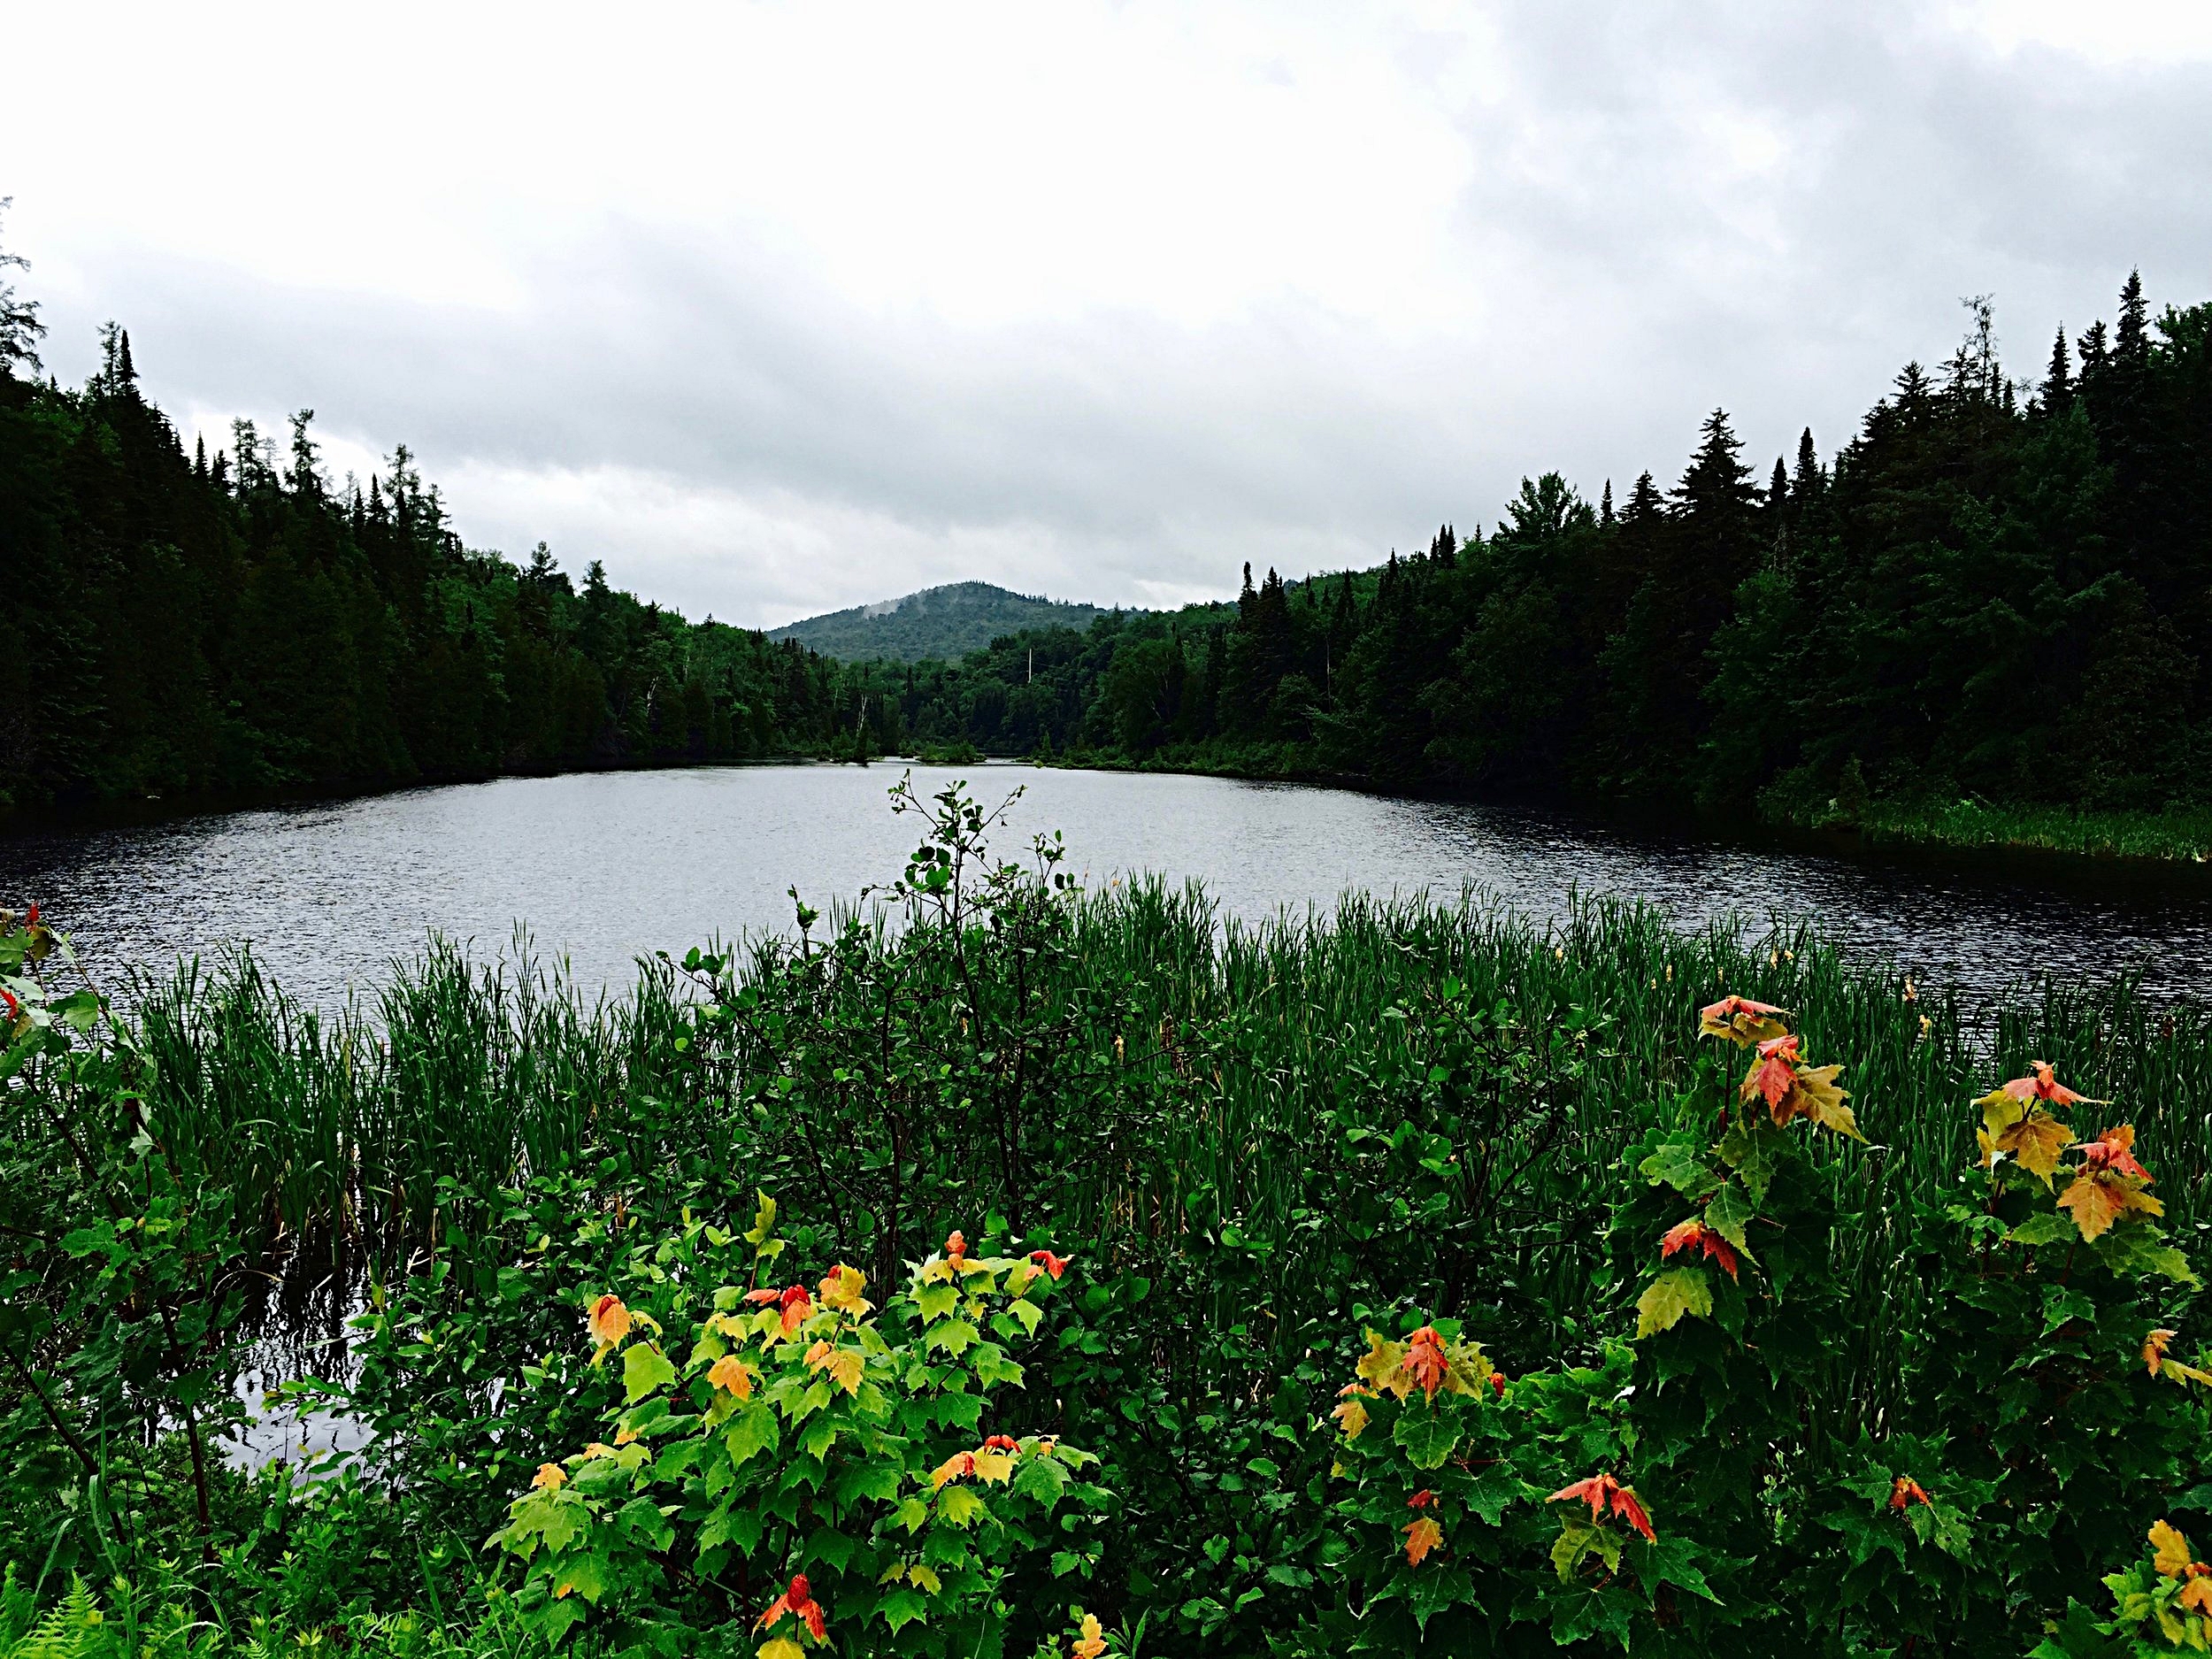  The Adirondack Mountains in Owls Head, N.Y.  (Chelsia Rose Marcius/June 23, 2015)&nbsp;  